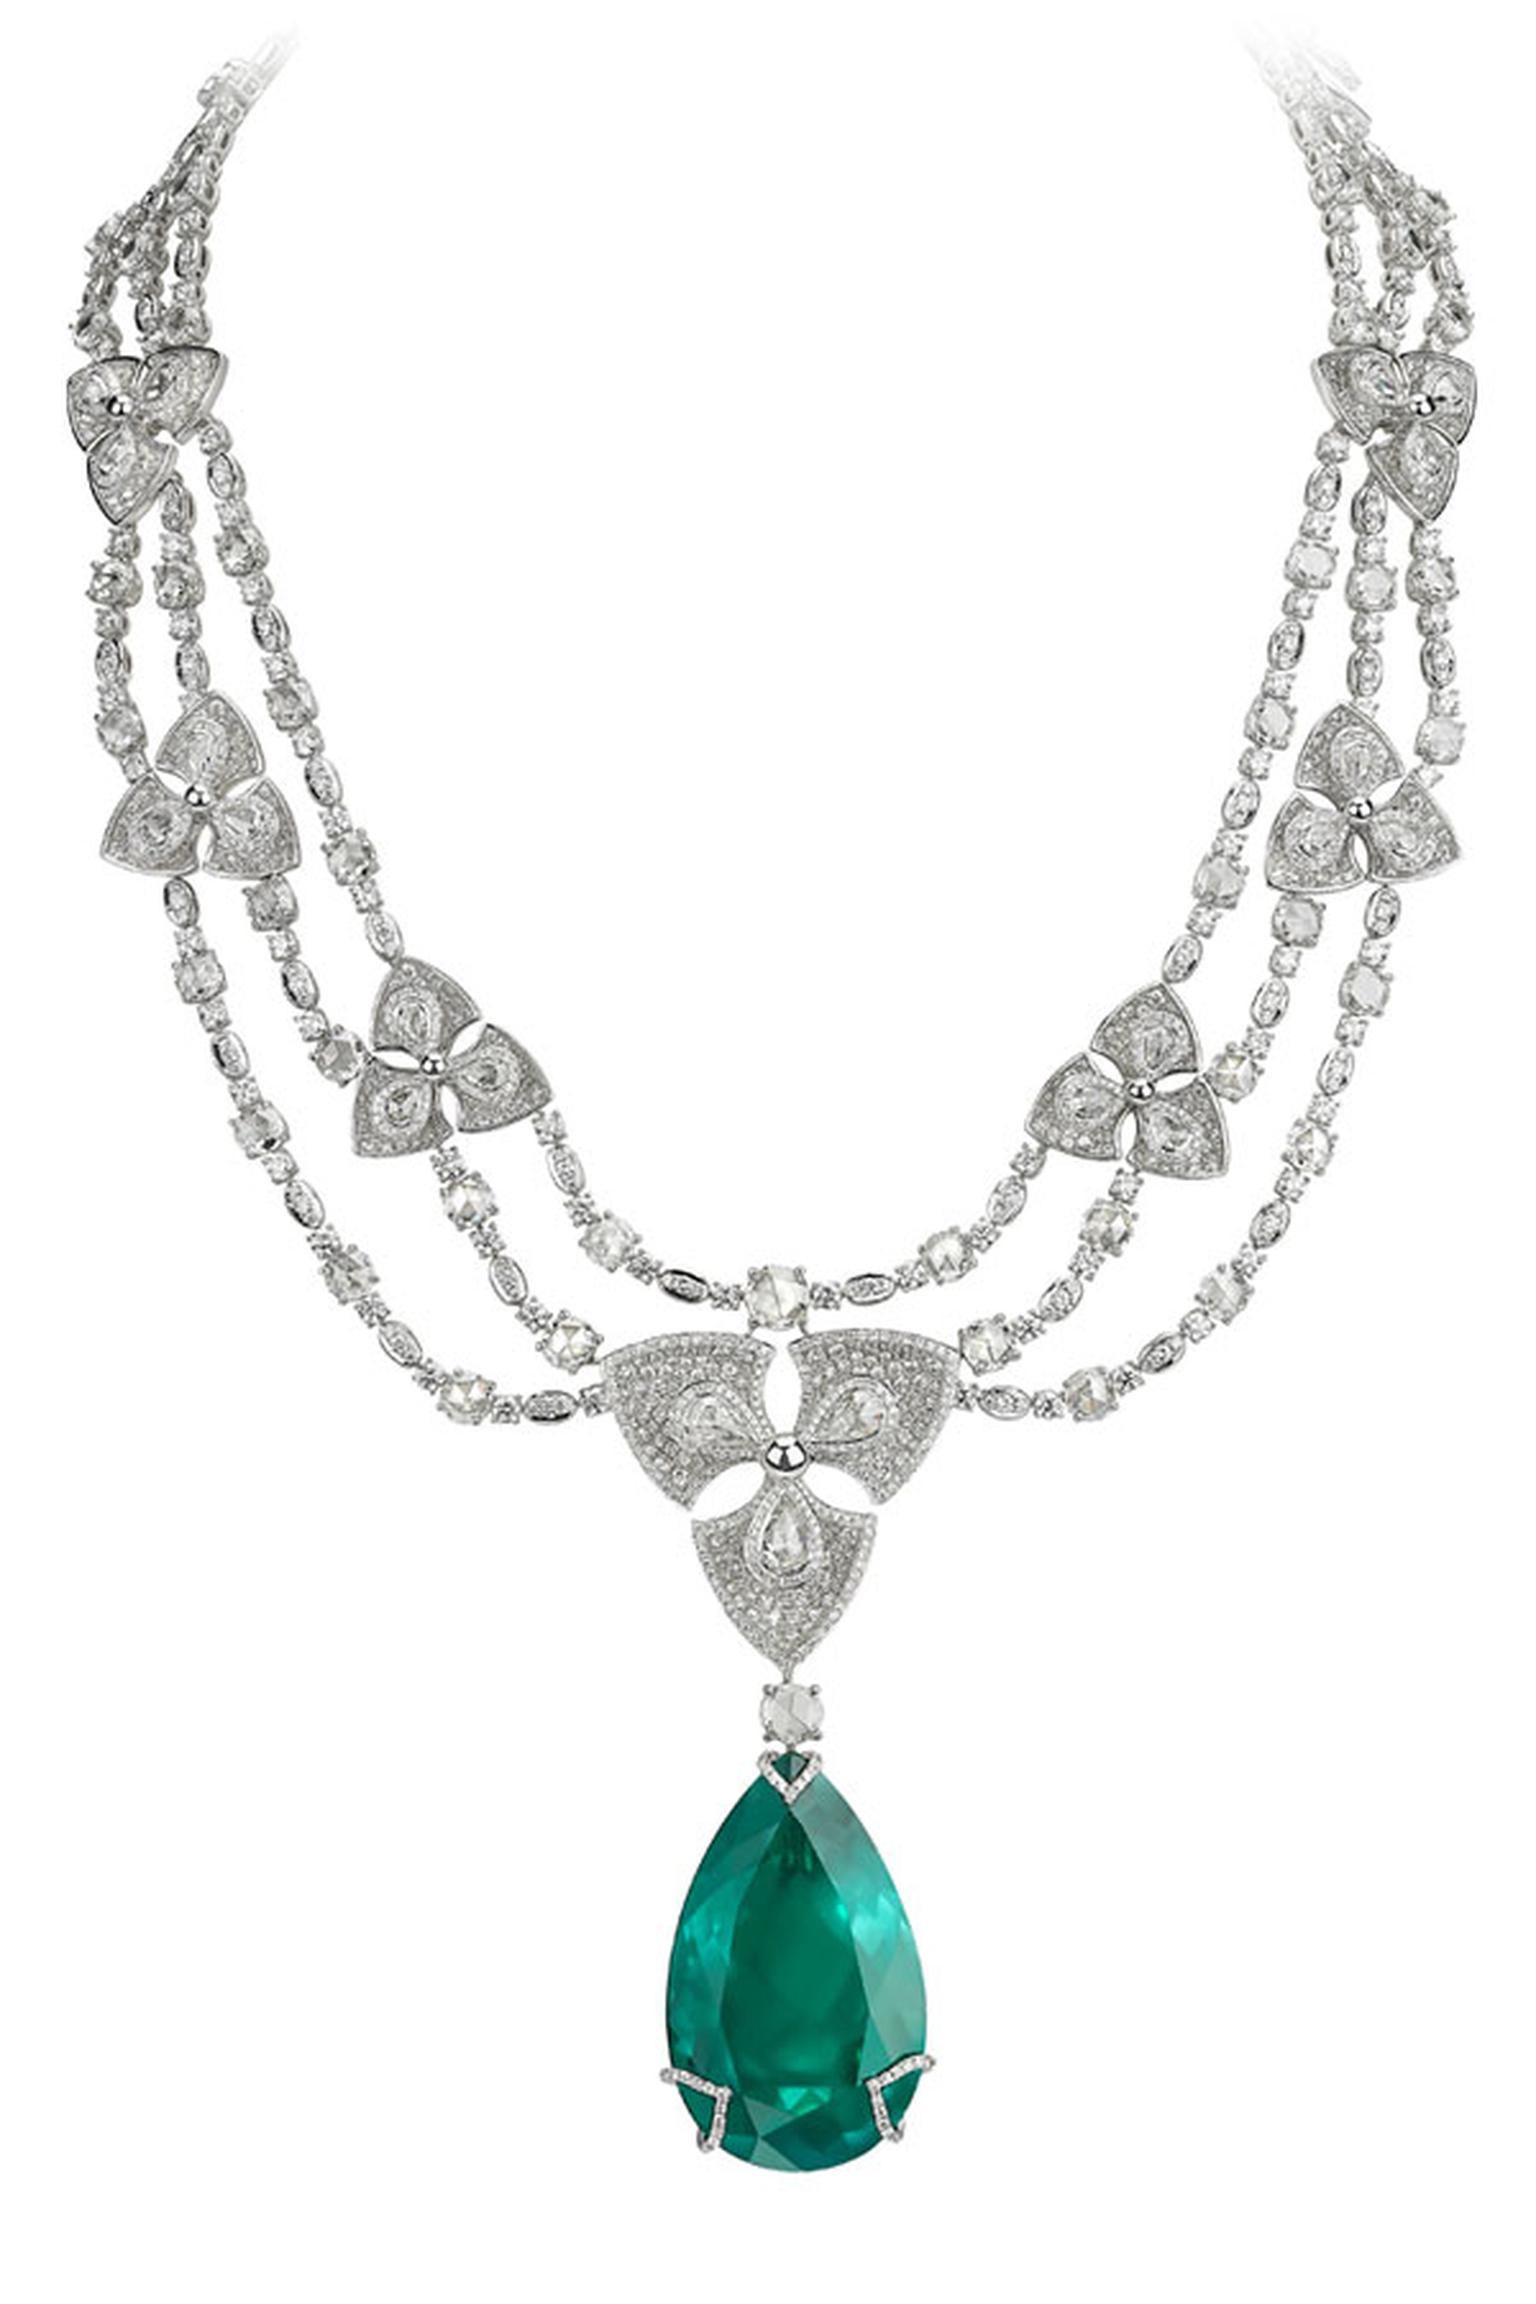 Avakian-pear-shape-emerald-necklace.jpg